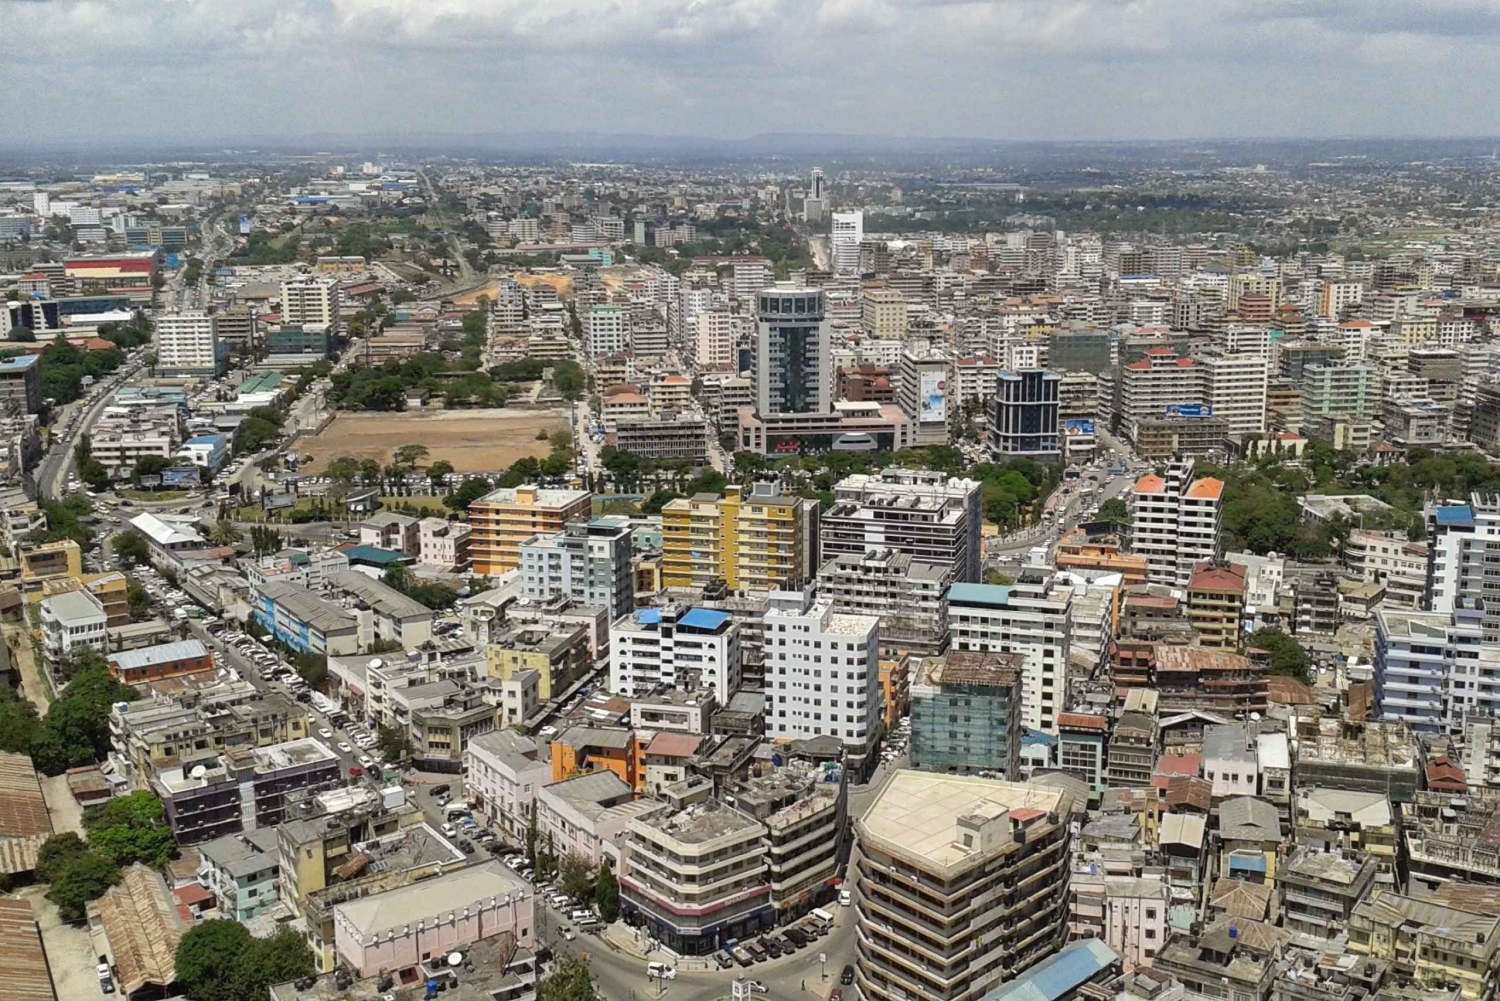 Stadstur i Dar es salaam, oförglömligt minne